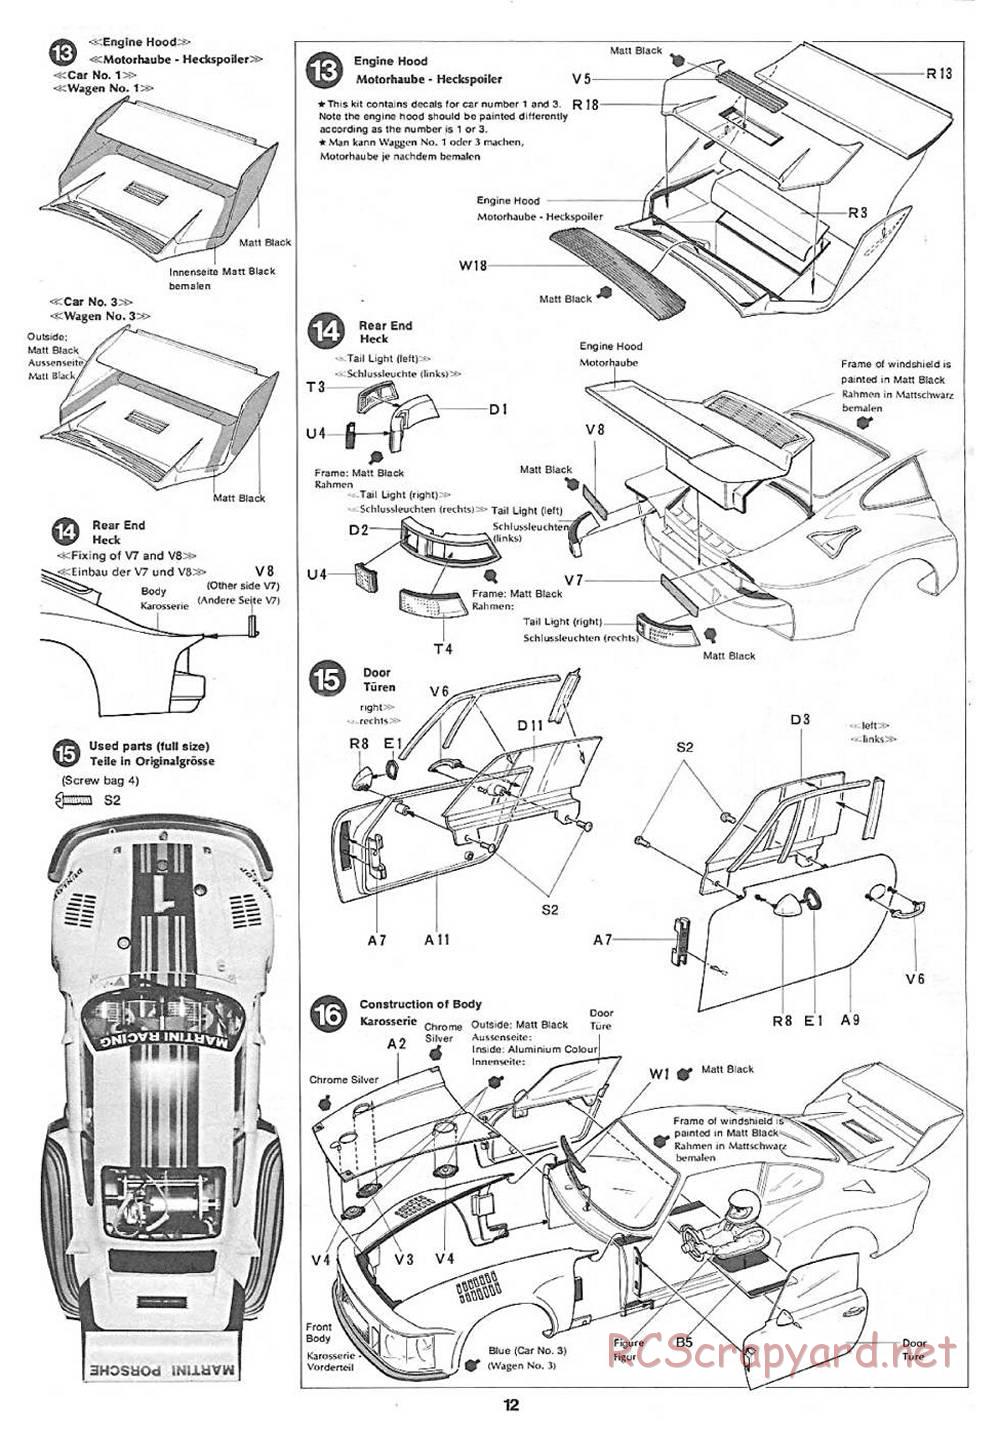 Tamiya - Martini Porsche 935 Turbo - 58002 - Manual - Page 12